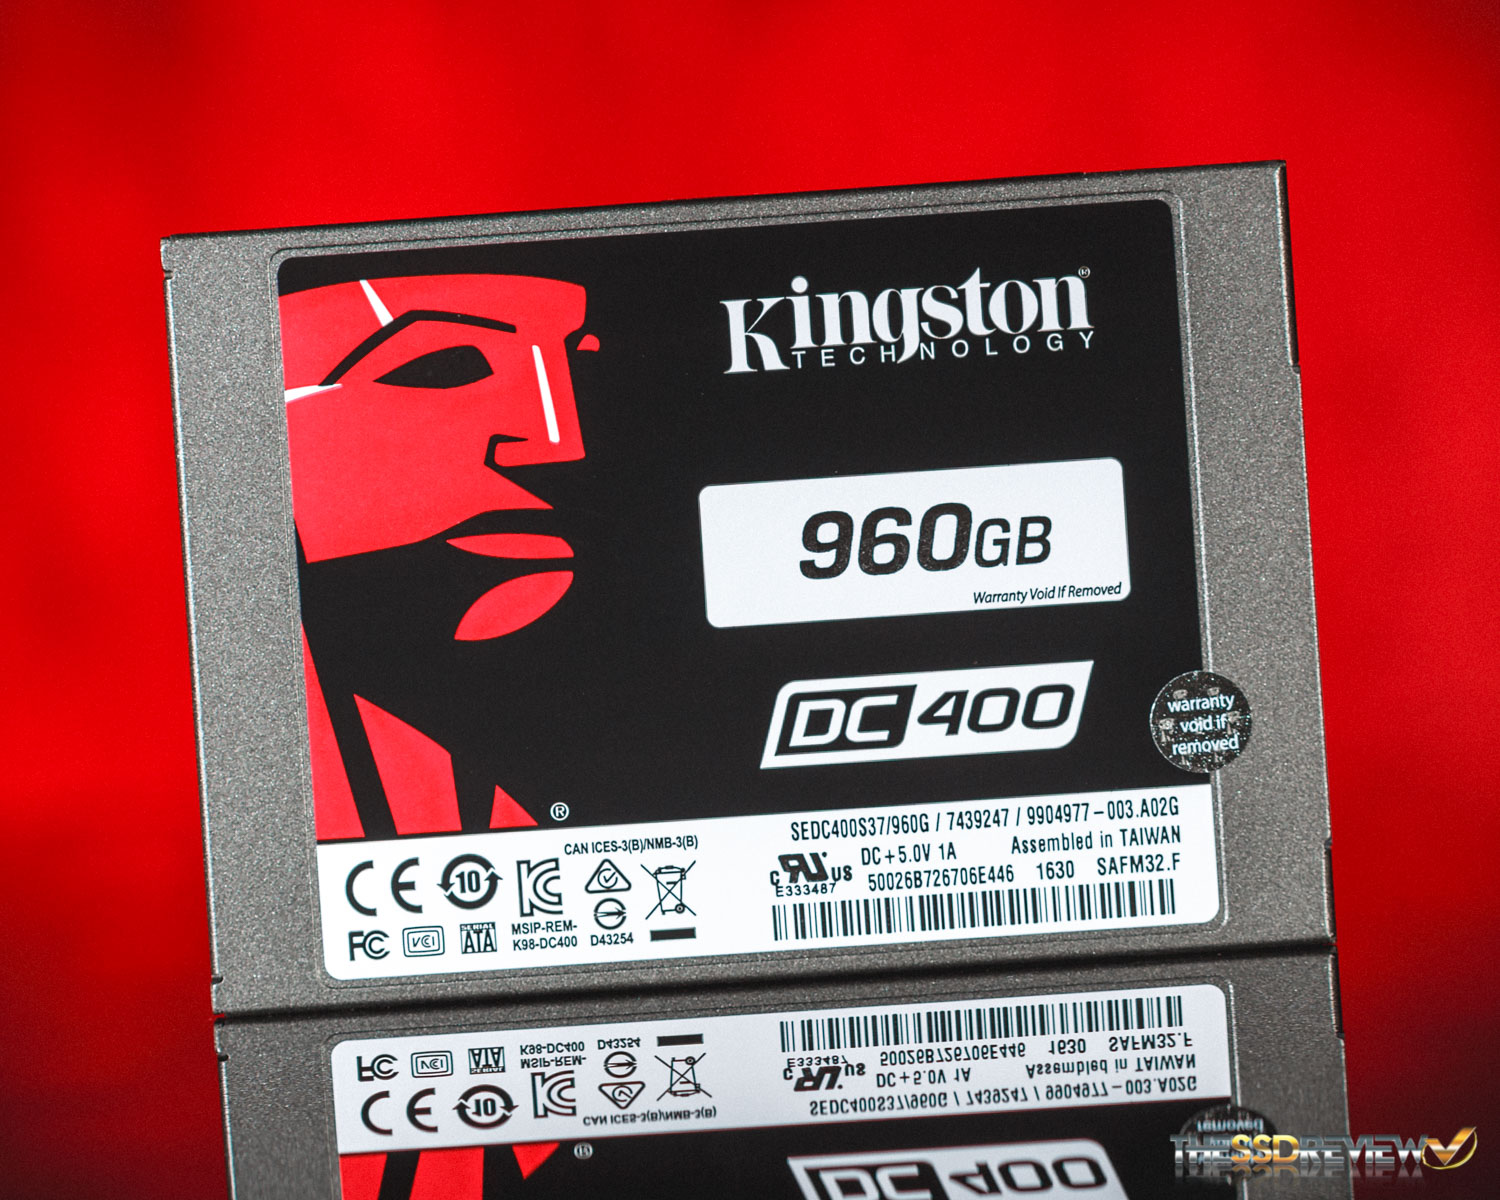 Kingston DC400 Review (800GB/960GB) | The SSD